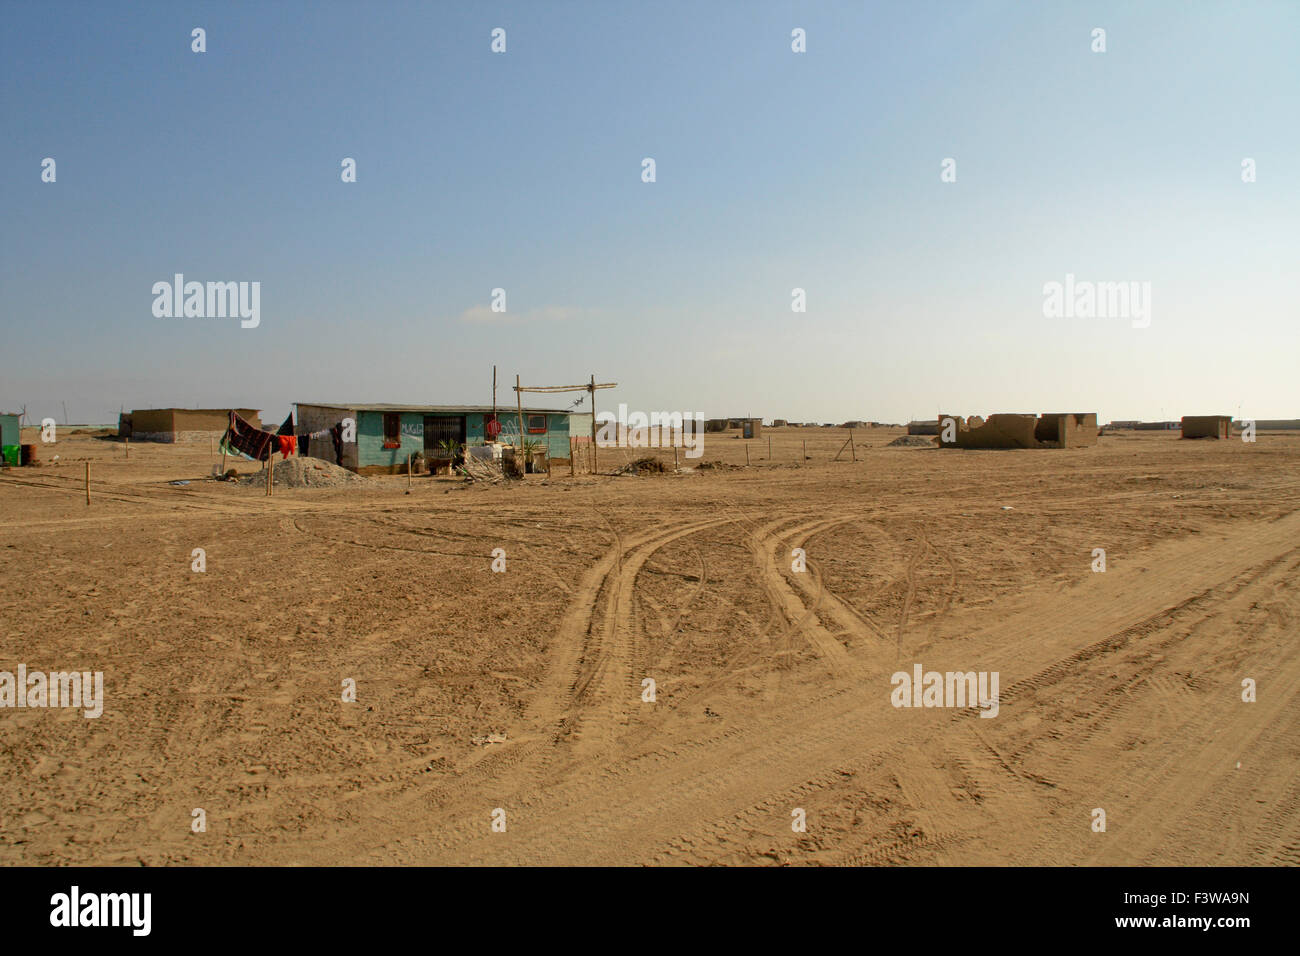 Village in desert Stock Photo